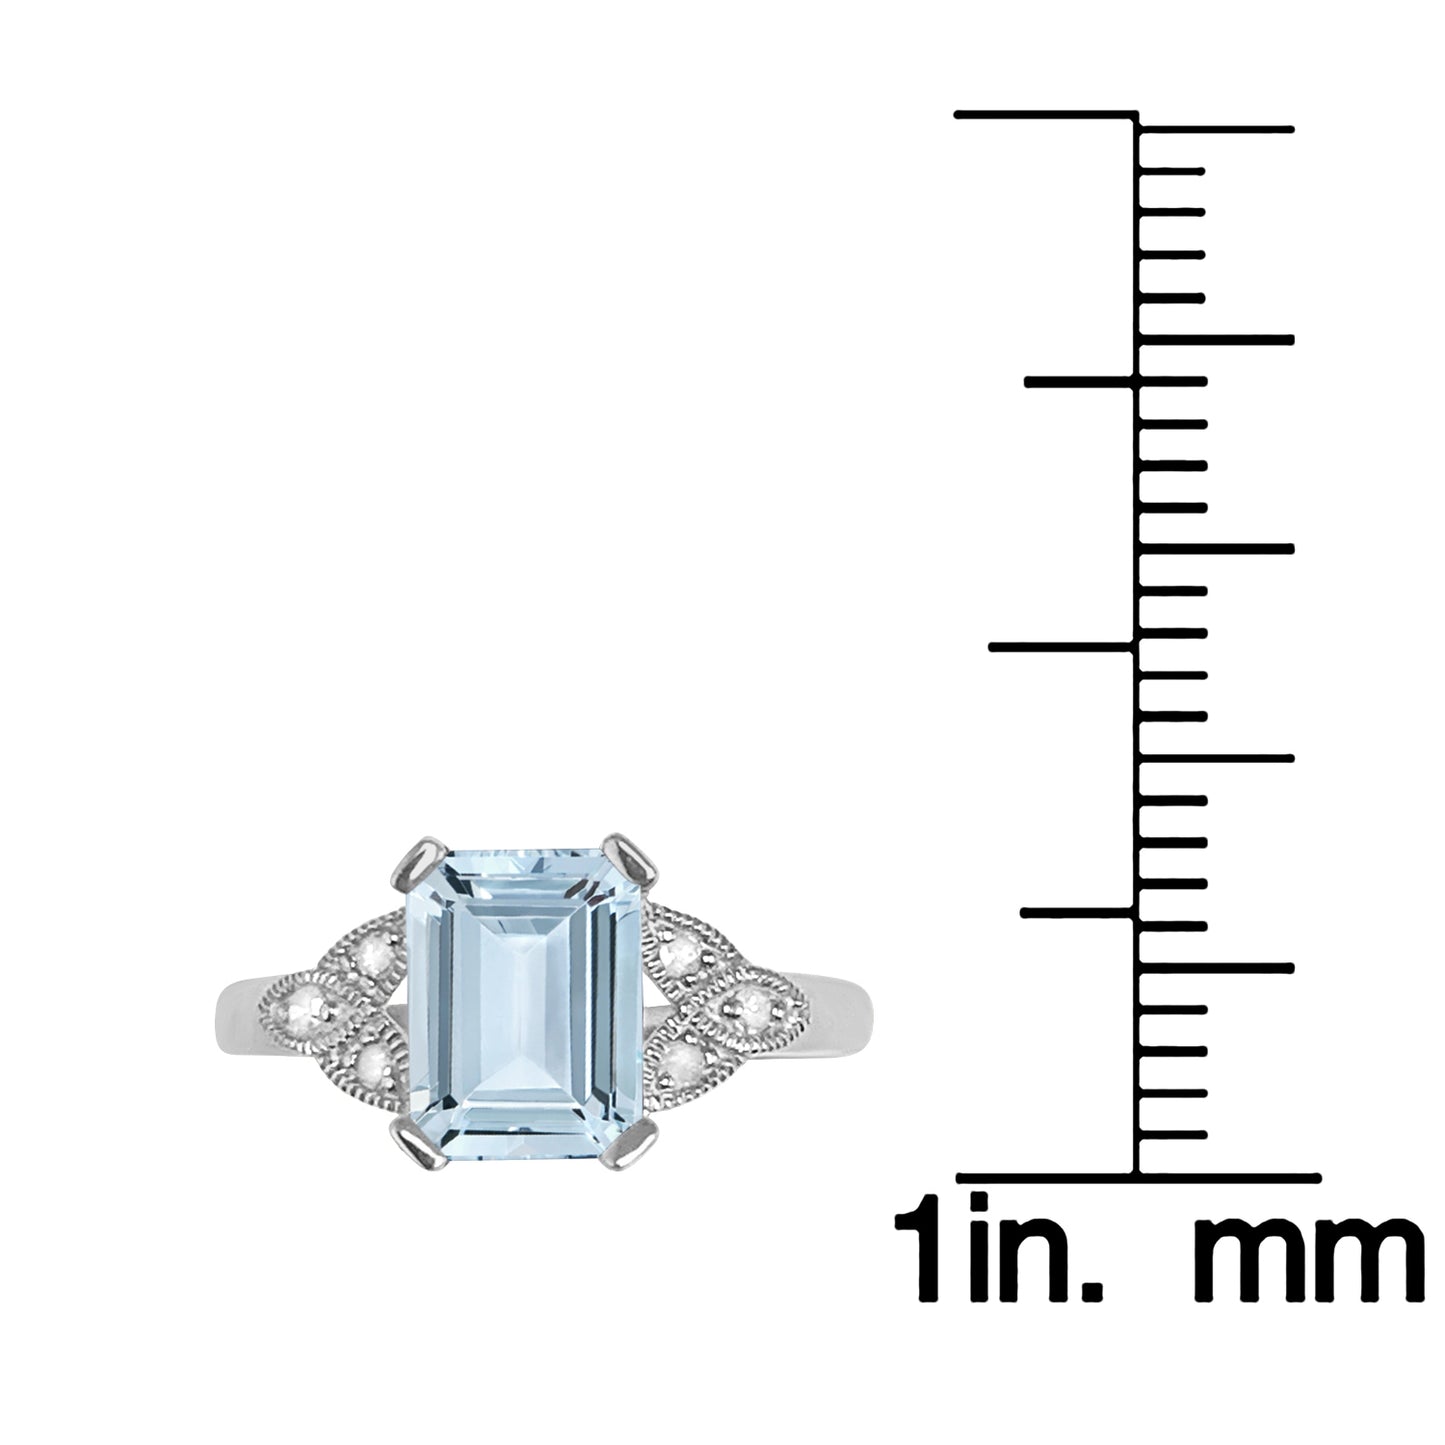 10k White Gold Vintage Style Genuine Emerald-Cut Aquamarine and Diamond Ring